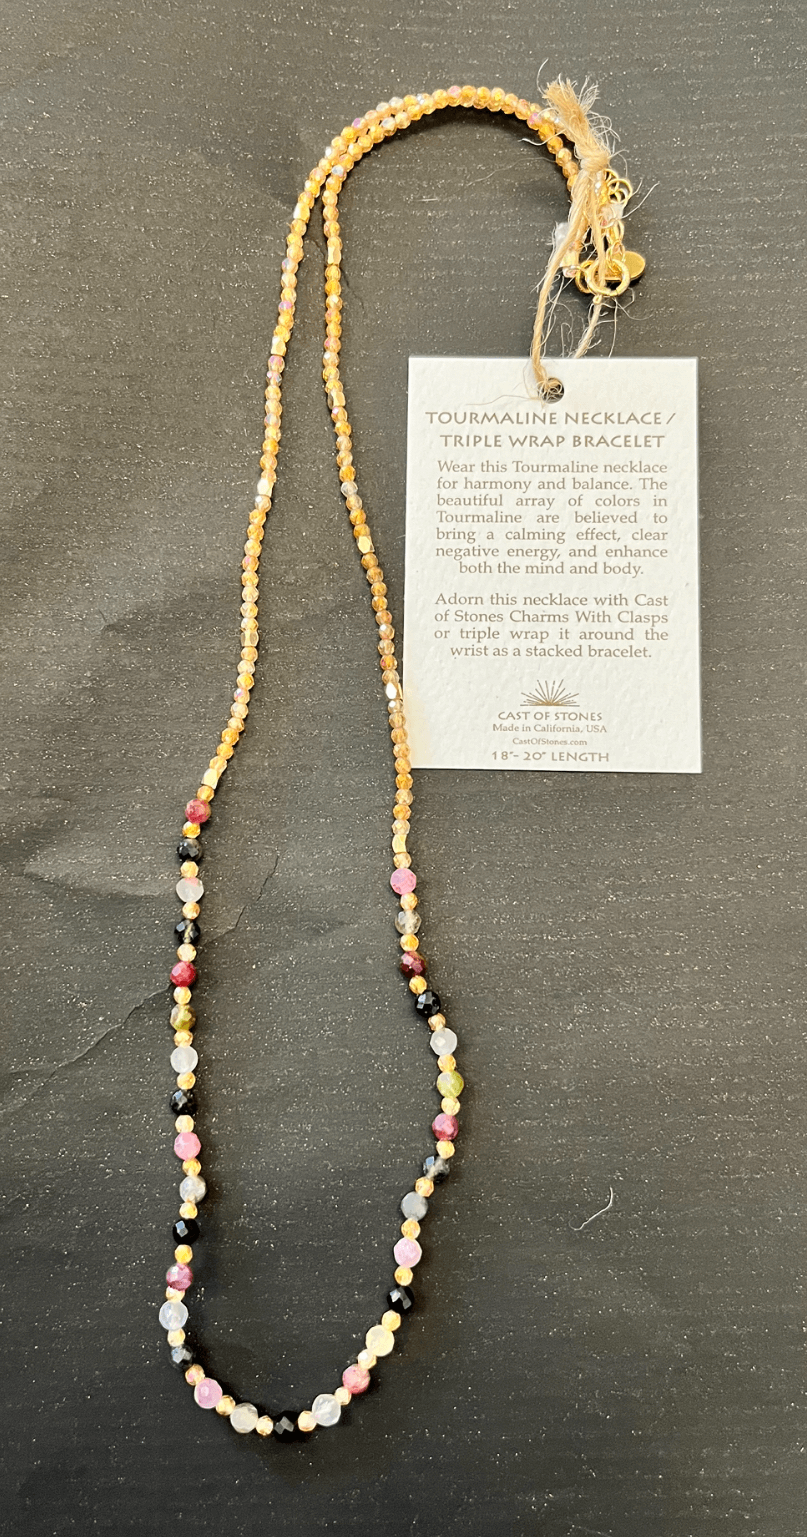 Tourmaline Necklace / Triple Wrap Bracelet